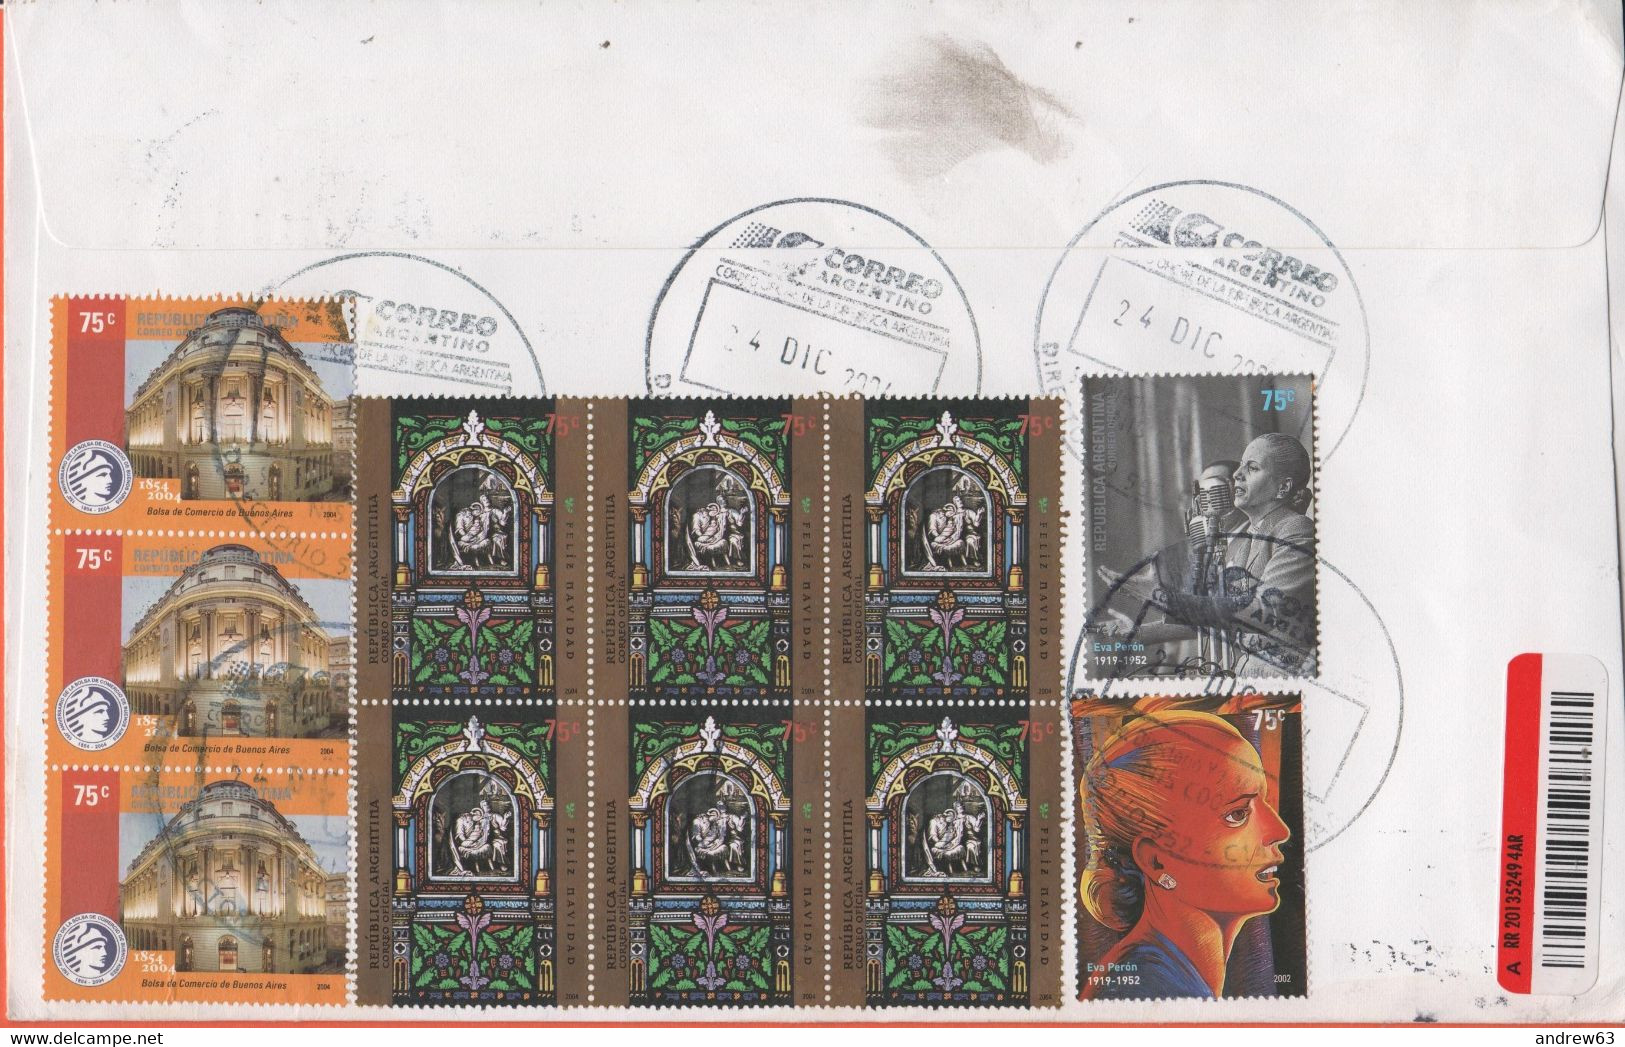 ARGENTINA - 2004 - 21 Stamps (11 On The Rear) - Registered - Medium Envelope - Viaggiata Da Buenos Aires Per Bruxelles, - Cartas & Documentos